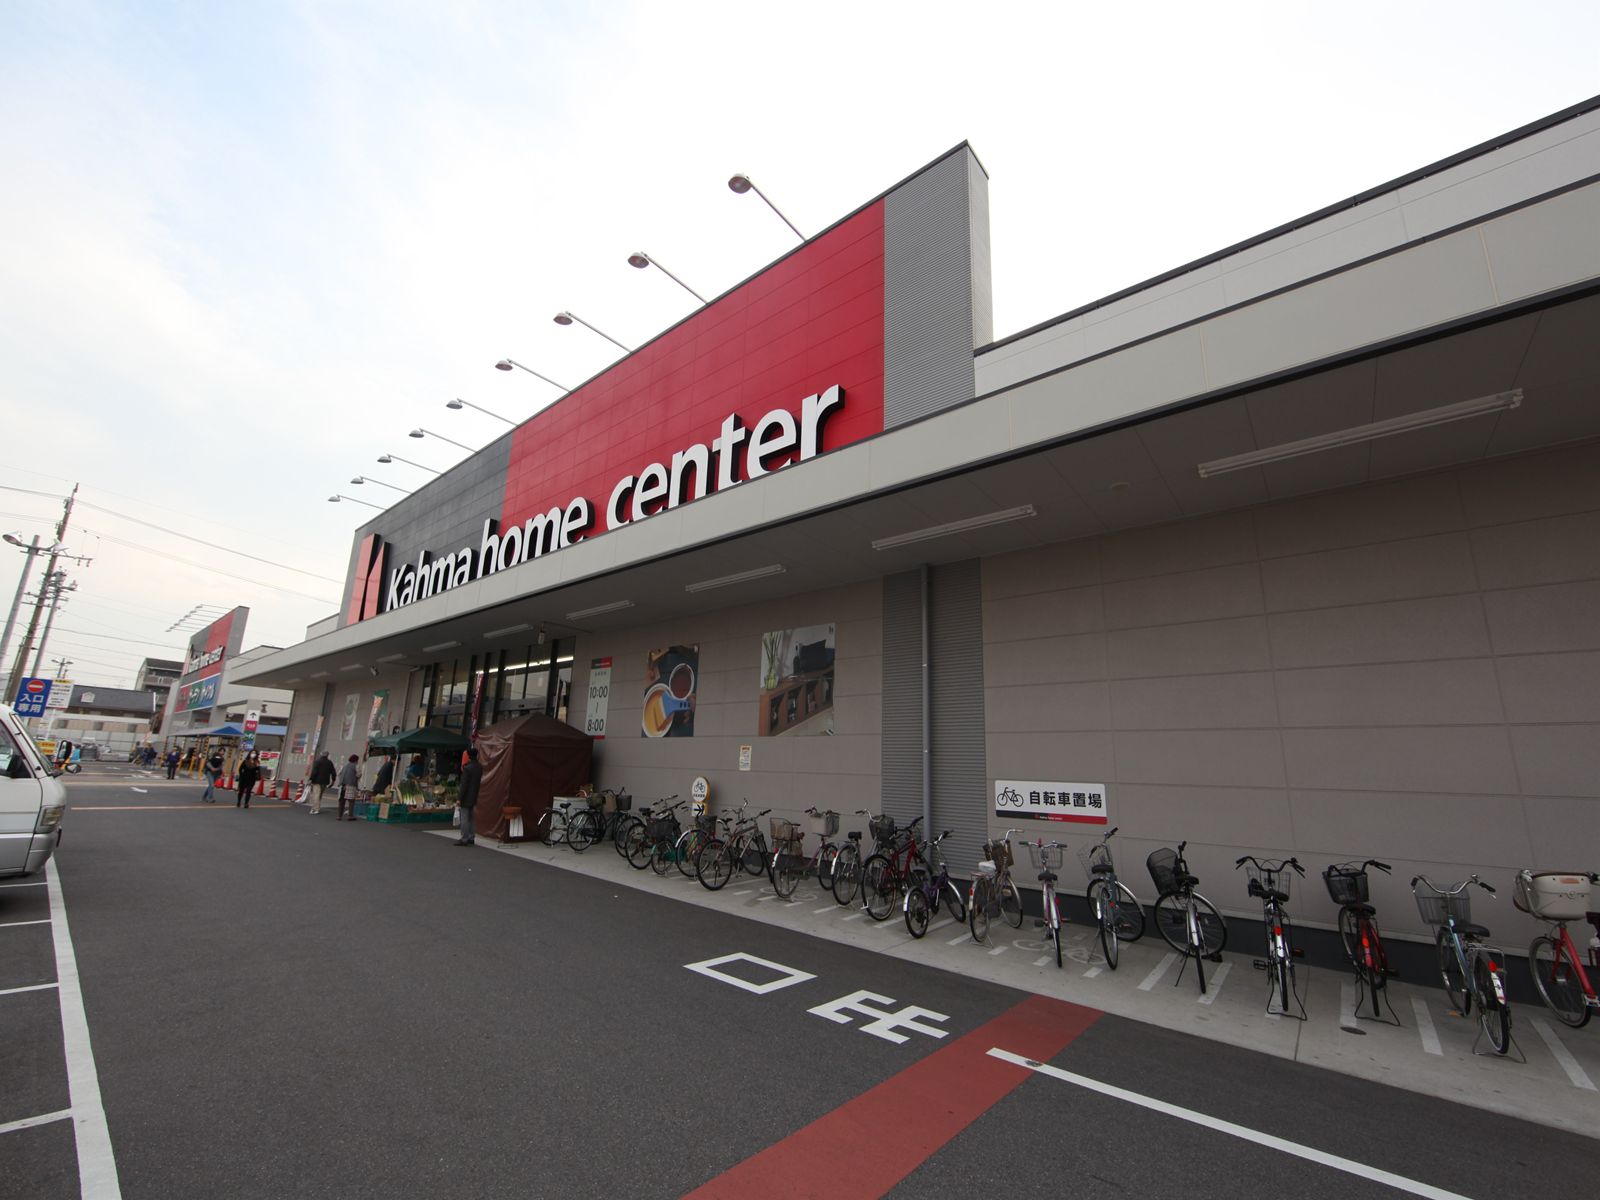 Home center. 1300m to Kama home improvement Nagoya golden store (hardware store)